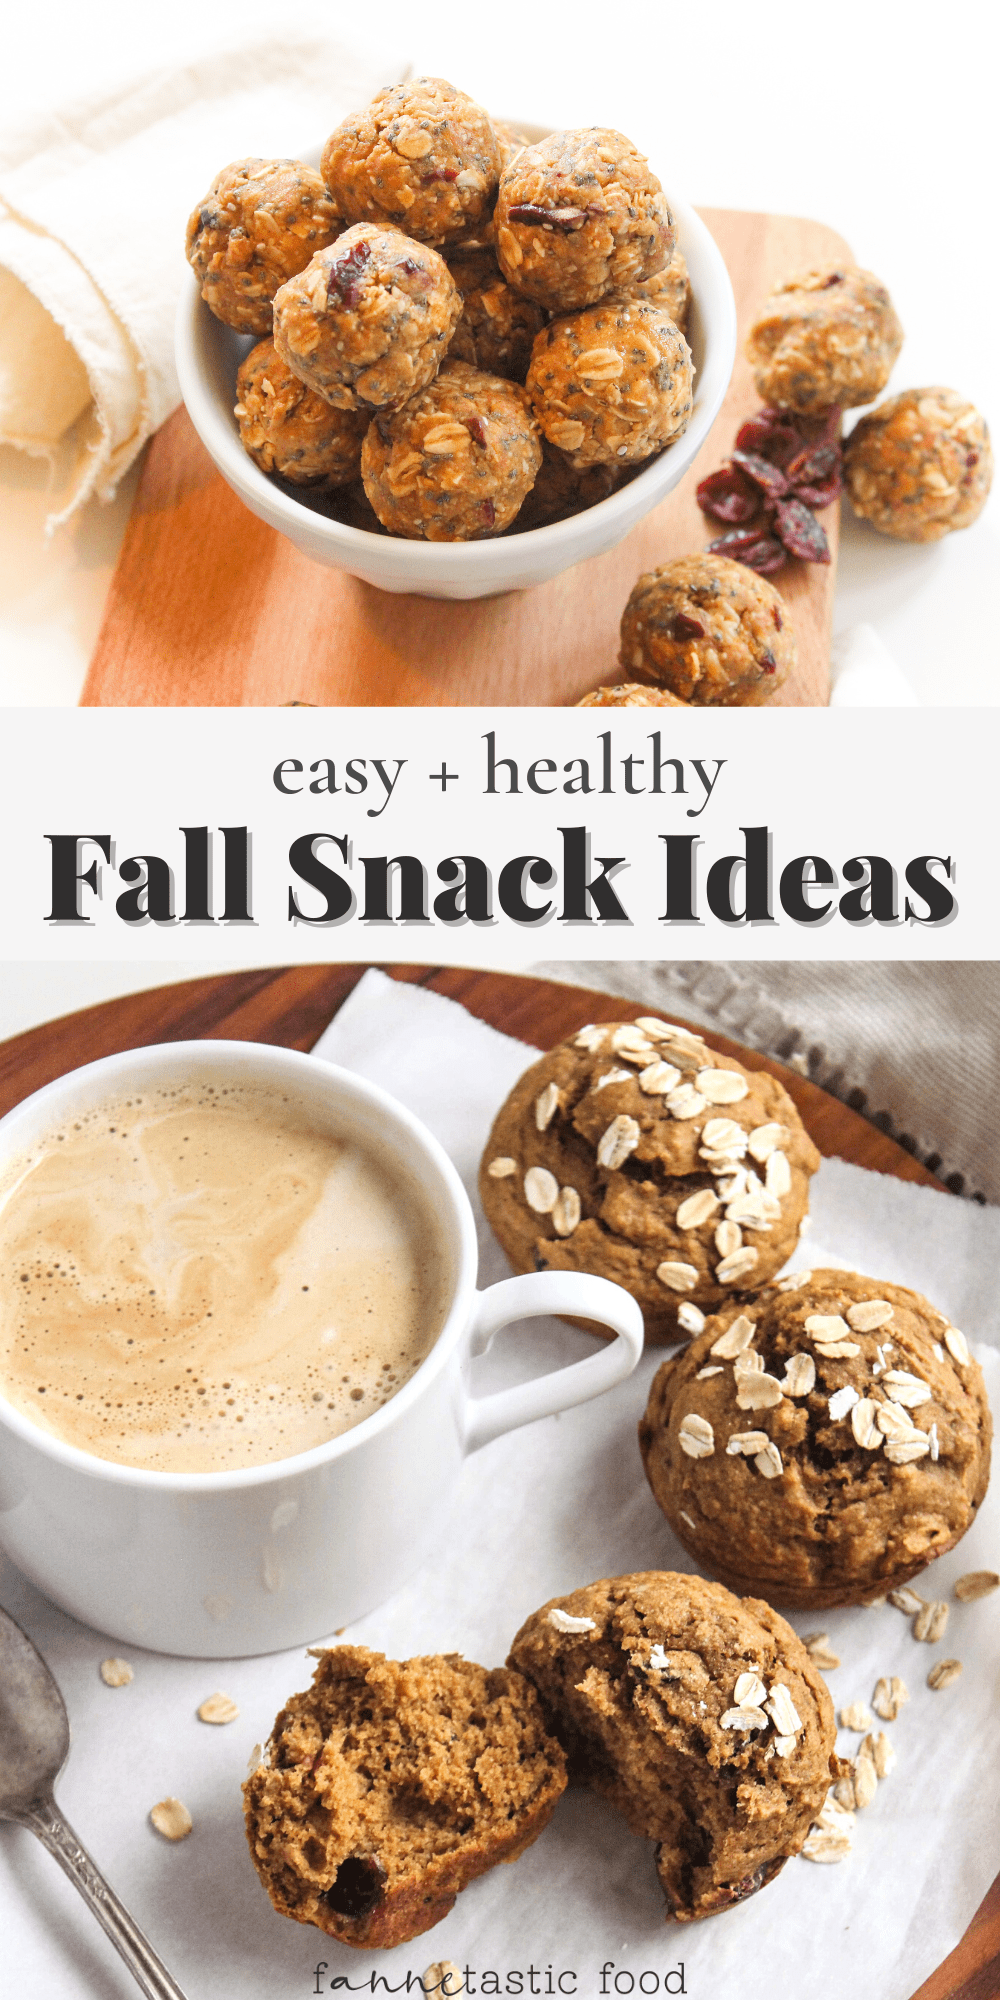 17 Healthy Fall Snacks to Make - fANNEtastic food